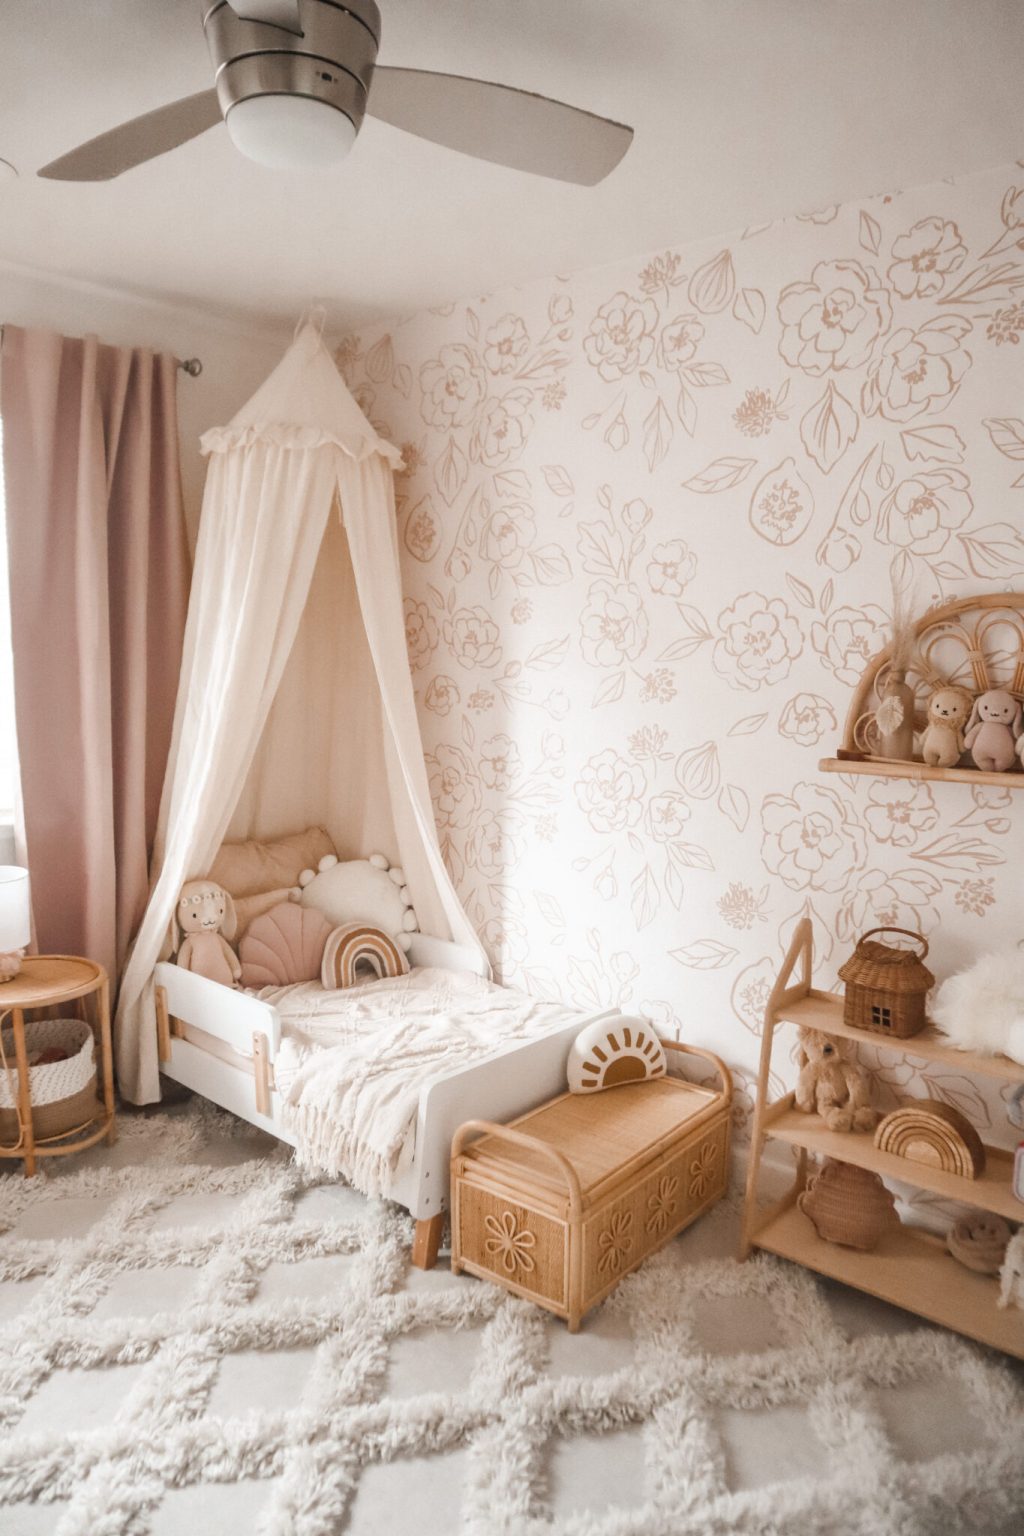 20 Boho Girl's Bedroom Ideas